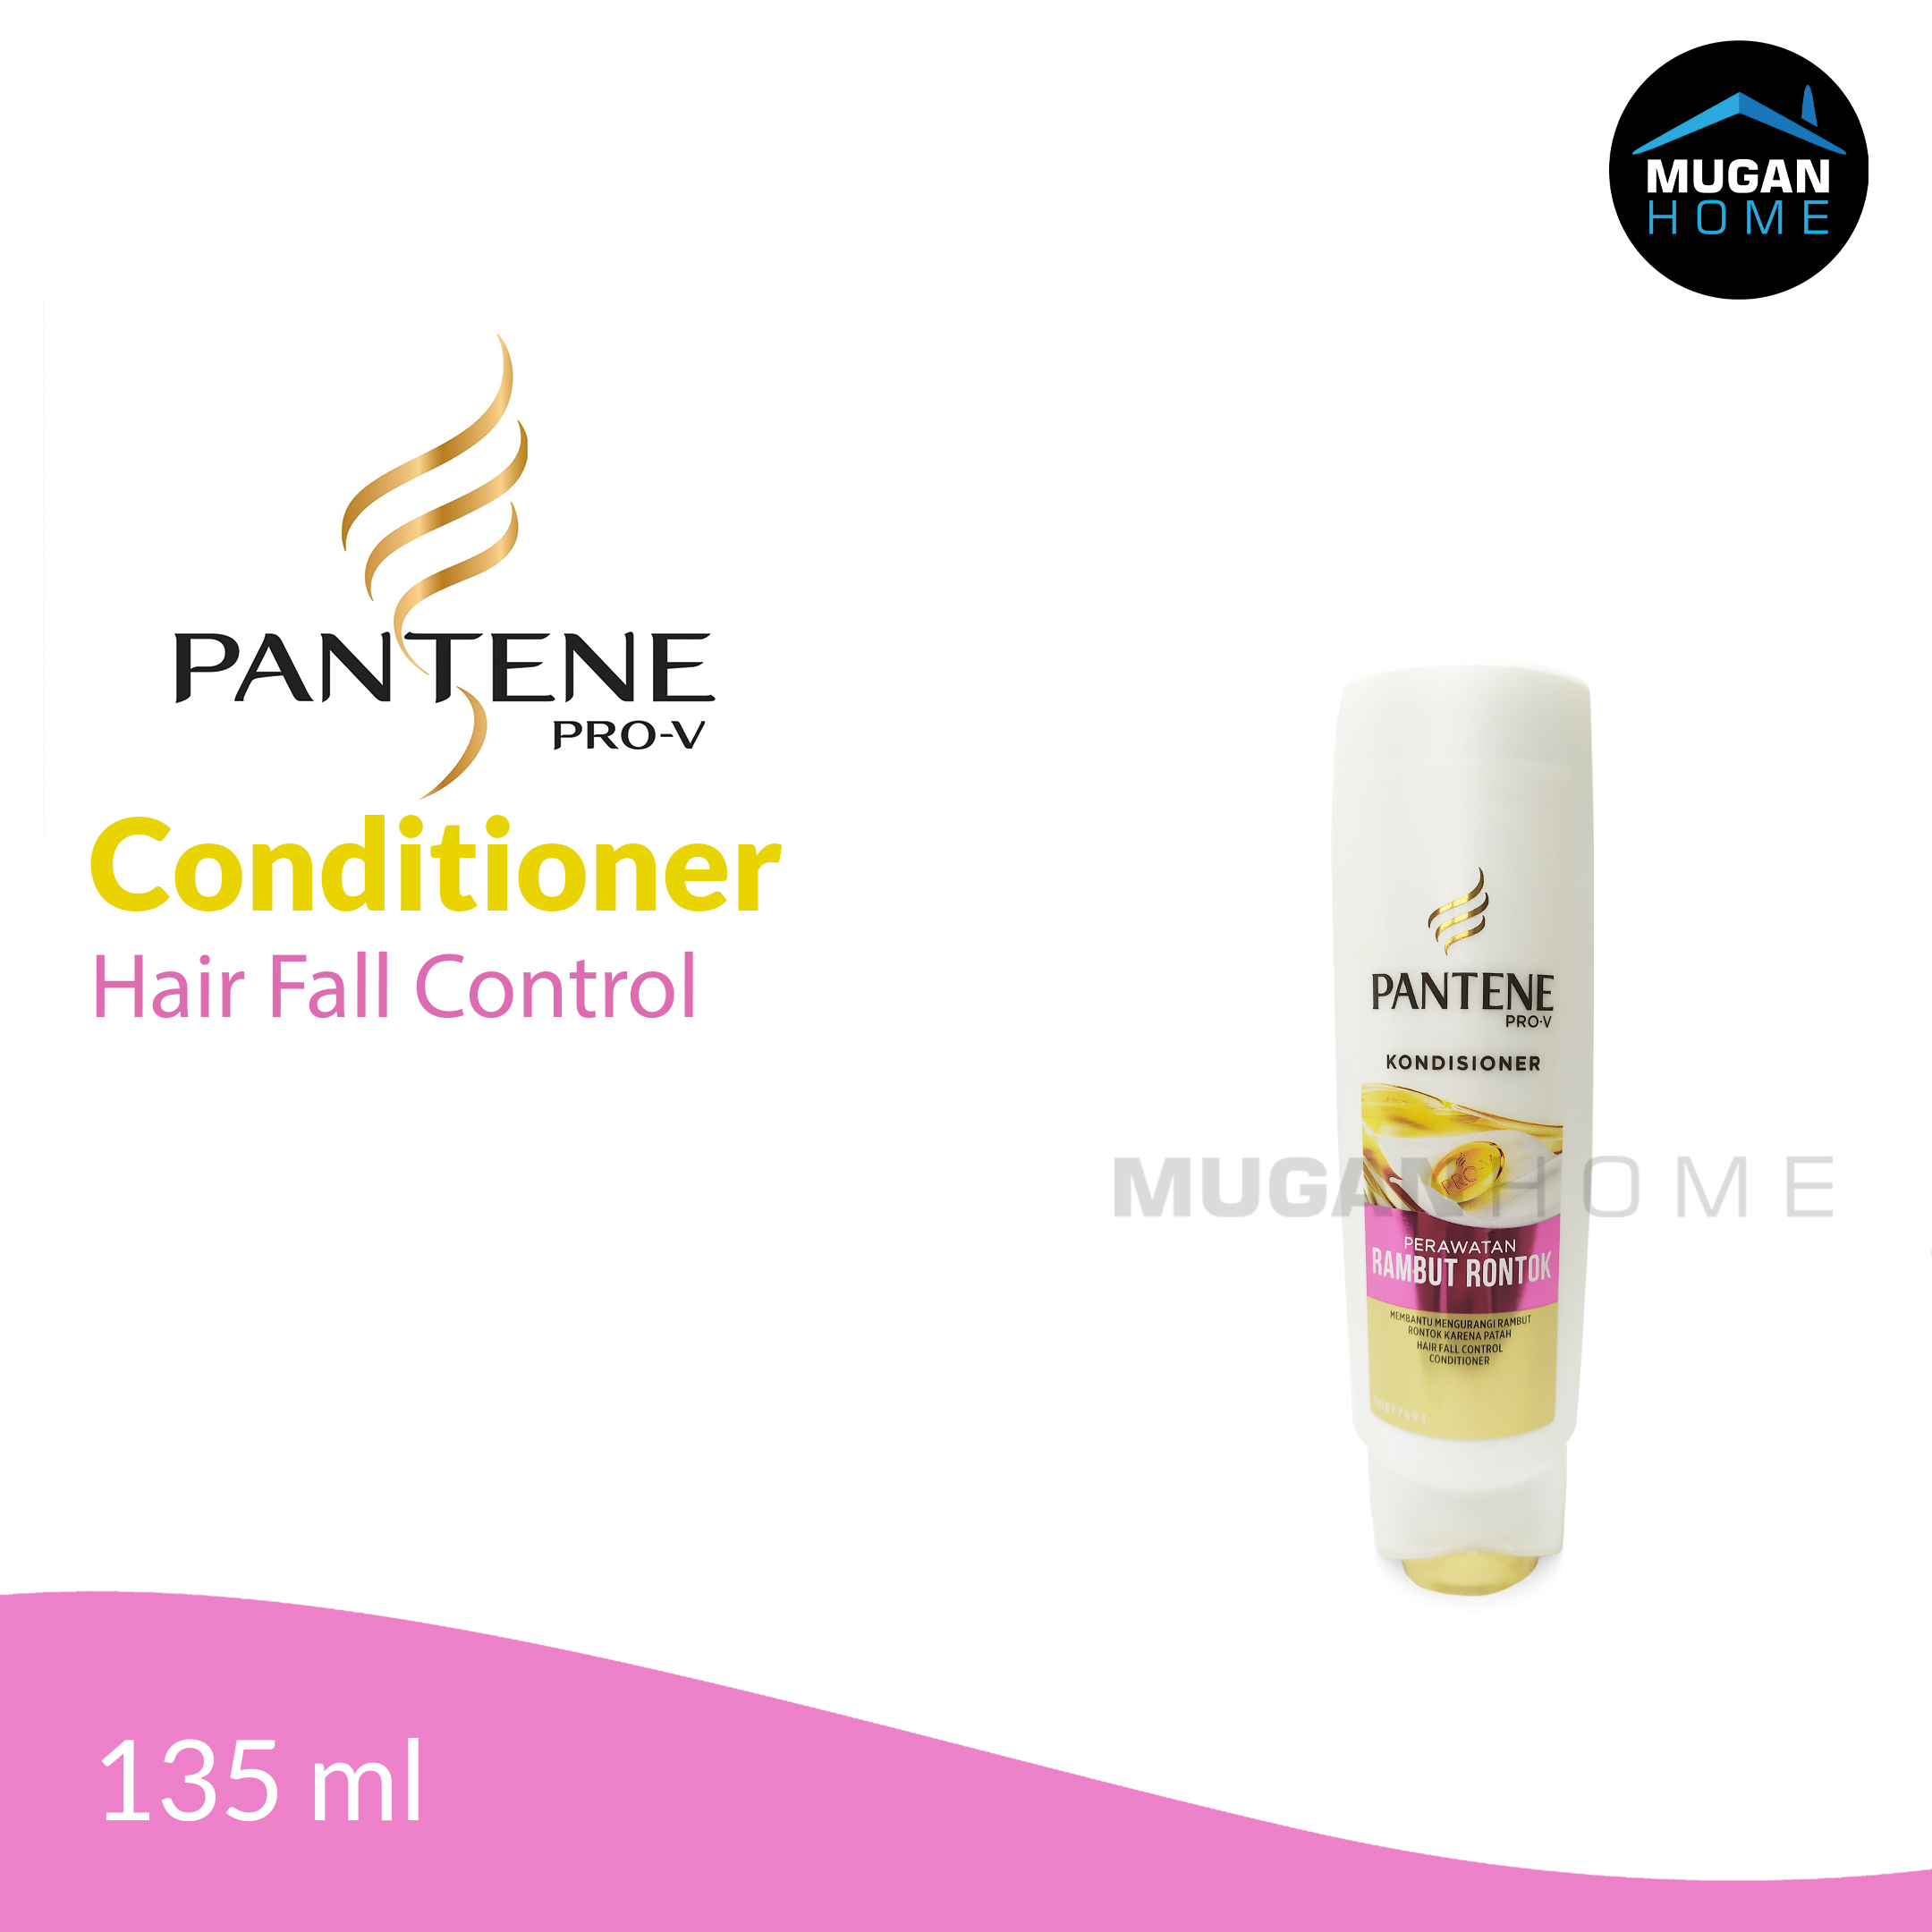 PANTENE CONDITIONER 135ML HAIR FALL CONTROL